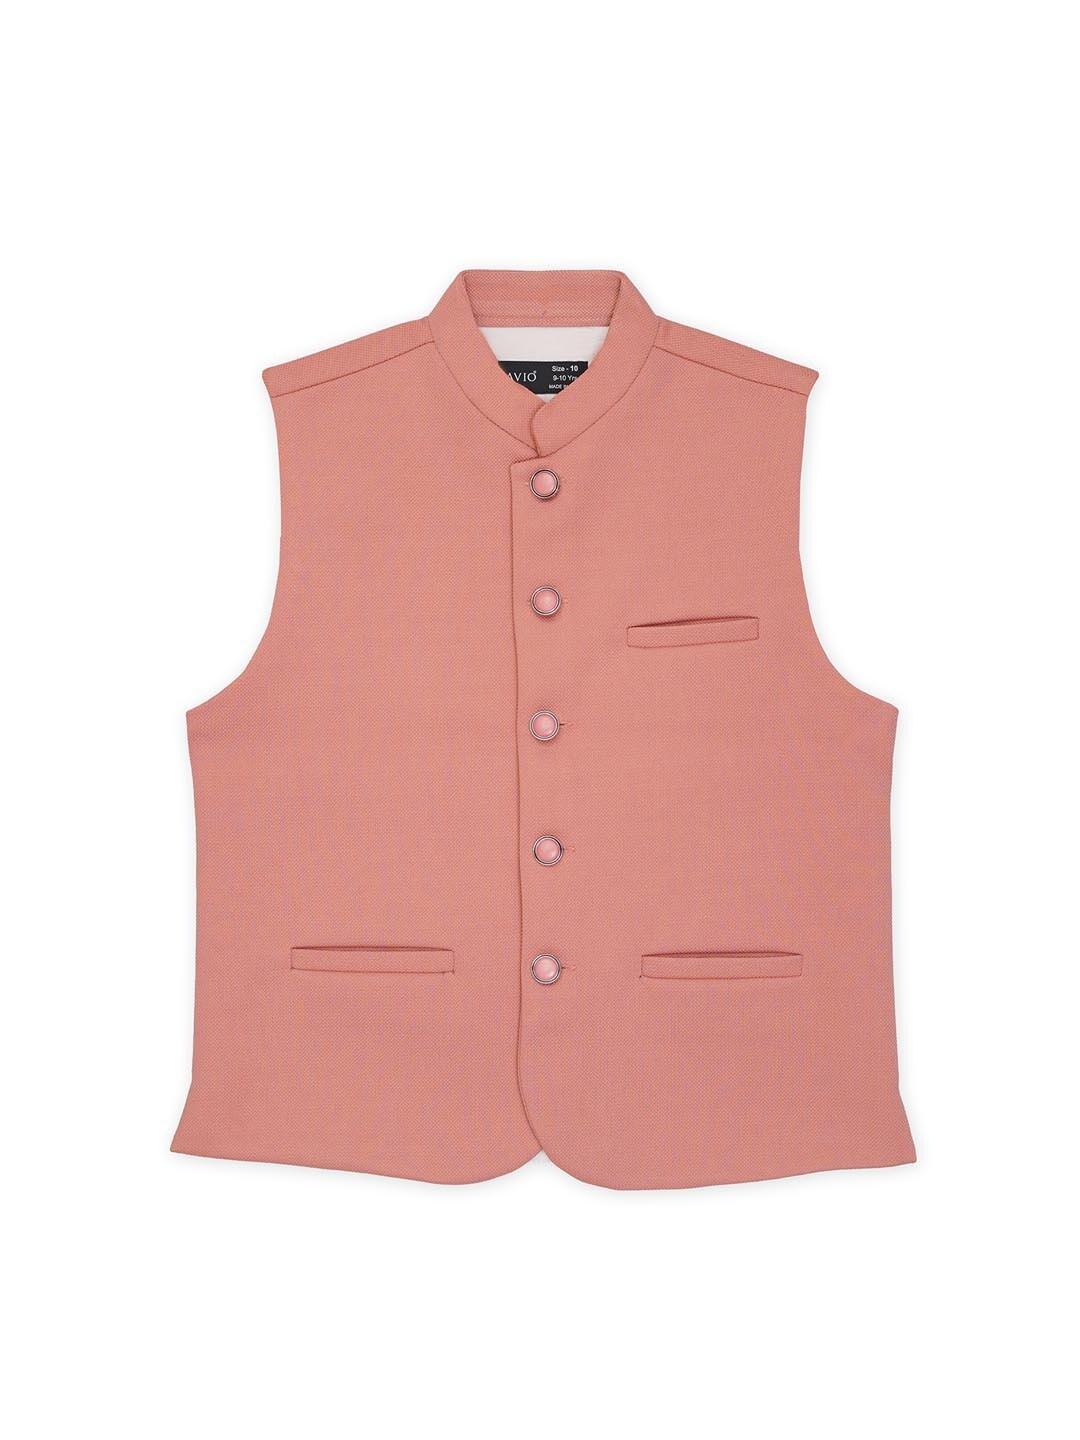 cavio-boys-mandarin-collar-sleeveless-pure-cotton-nehru-jackets